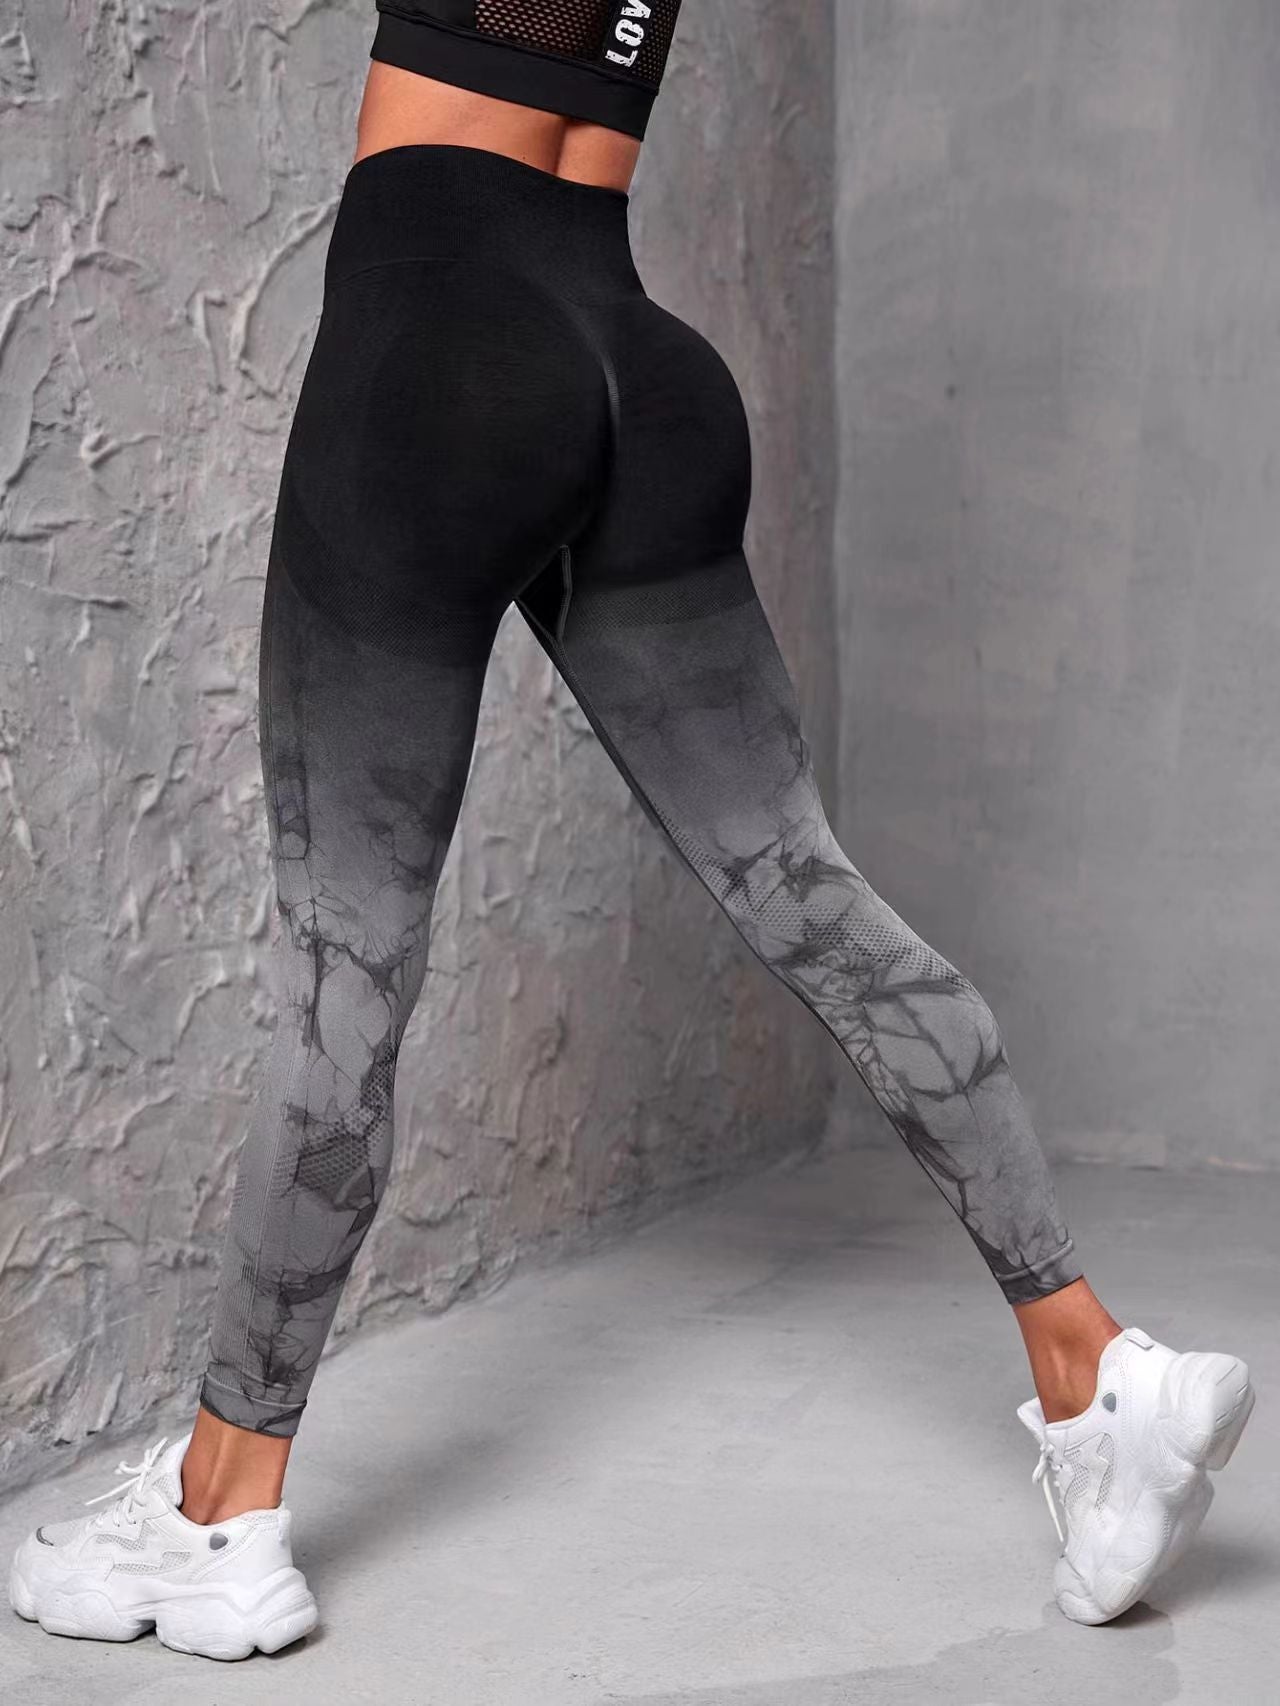 Seamless Leggings Yoga Pants Women Push Up Sports Fitness Joggings Gradient High Waist Gym Workout Scrunch Butt Running Leggings GrayL  60.99 EZYSELLA SHOP